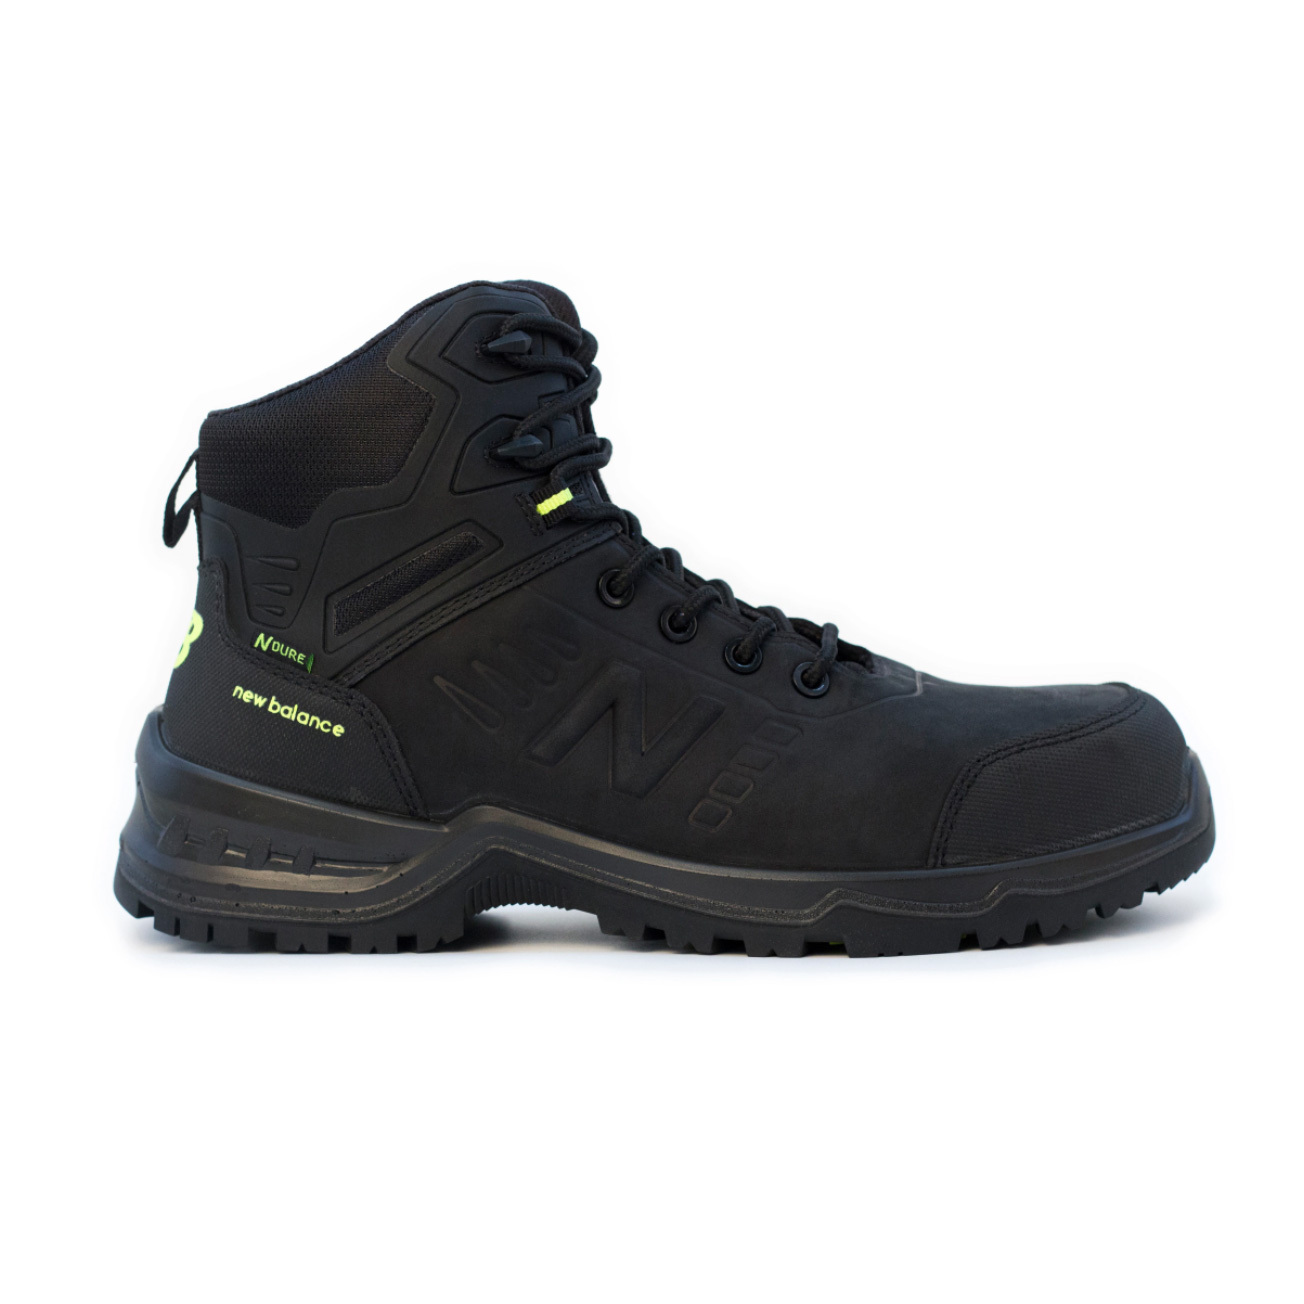 New Balance Industrial Contour Work Boots Black (4E width) Size US9